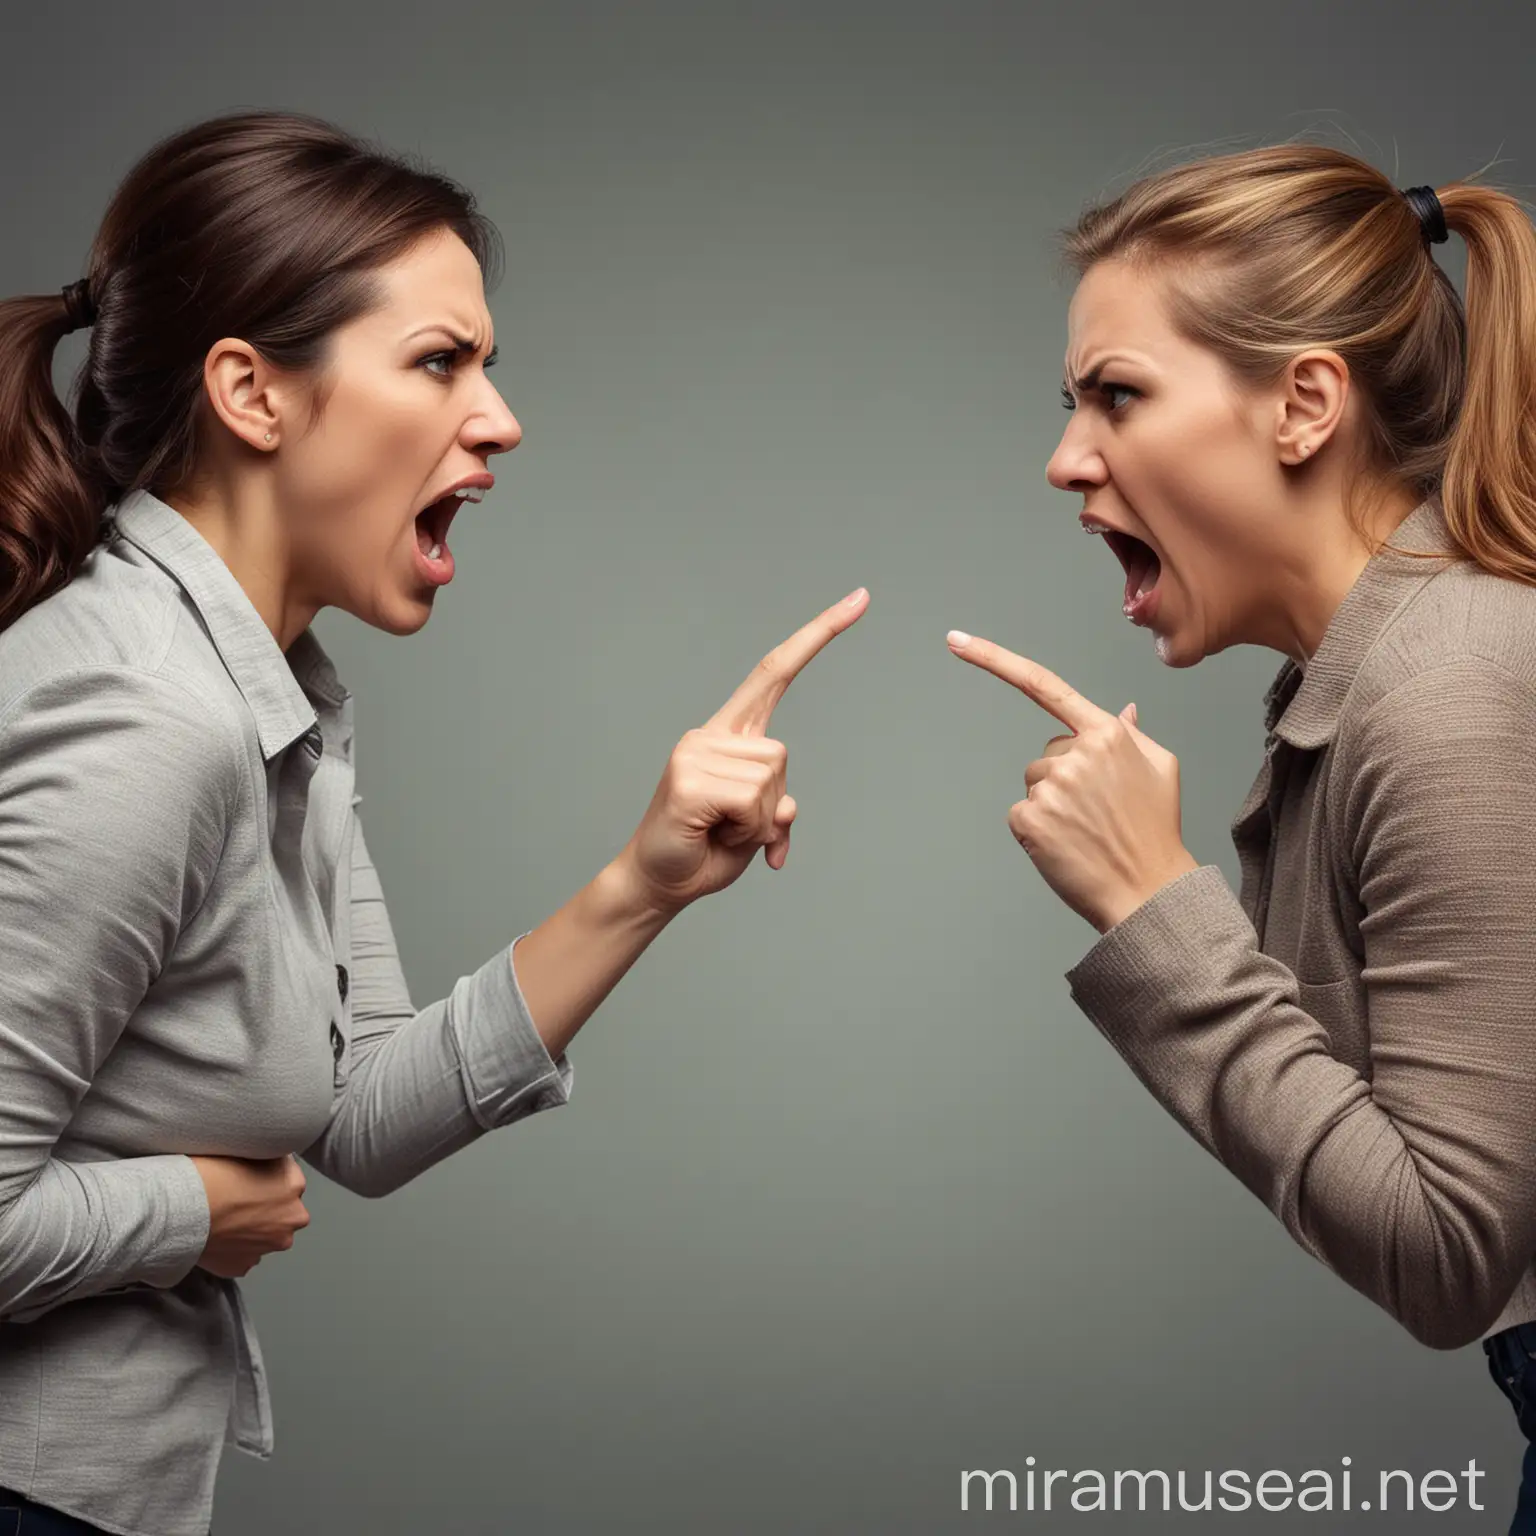 Intense Argument Between Two Women